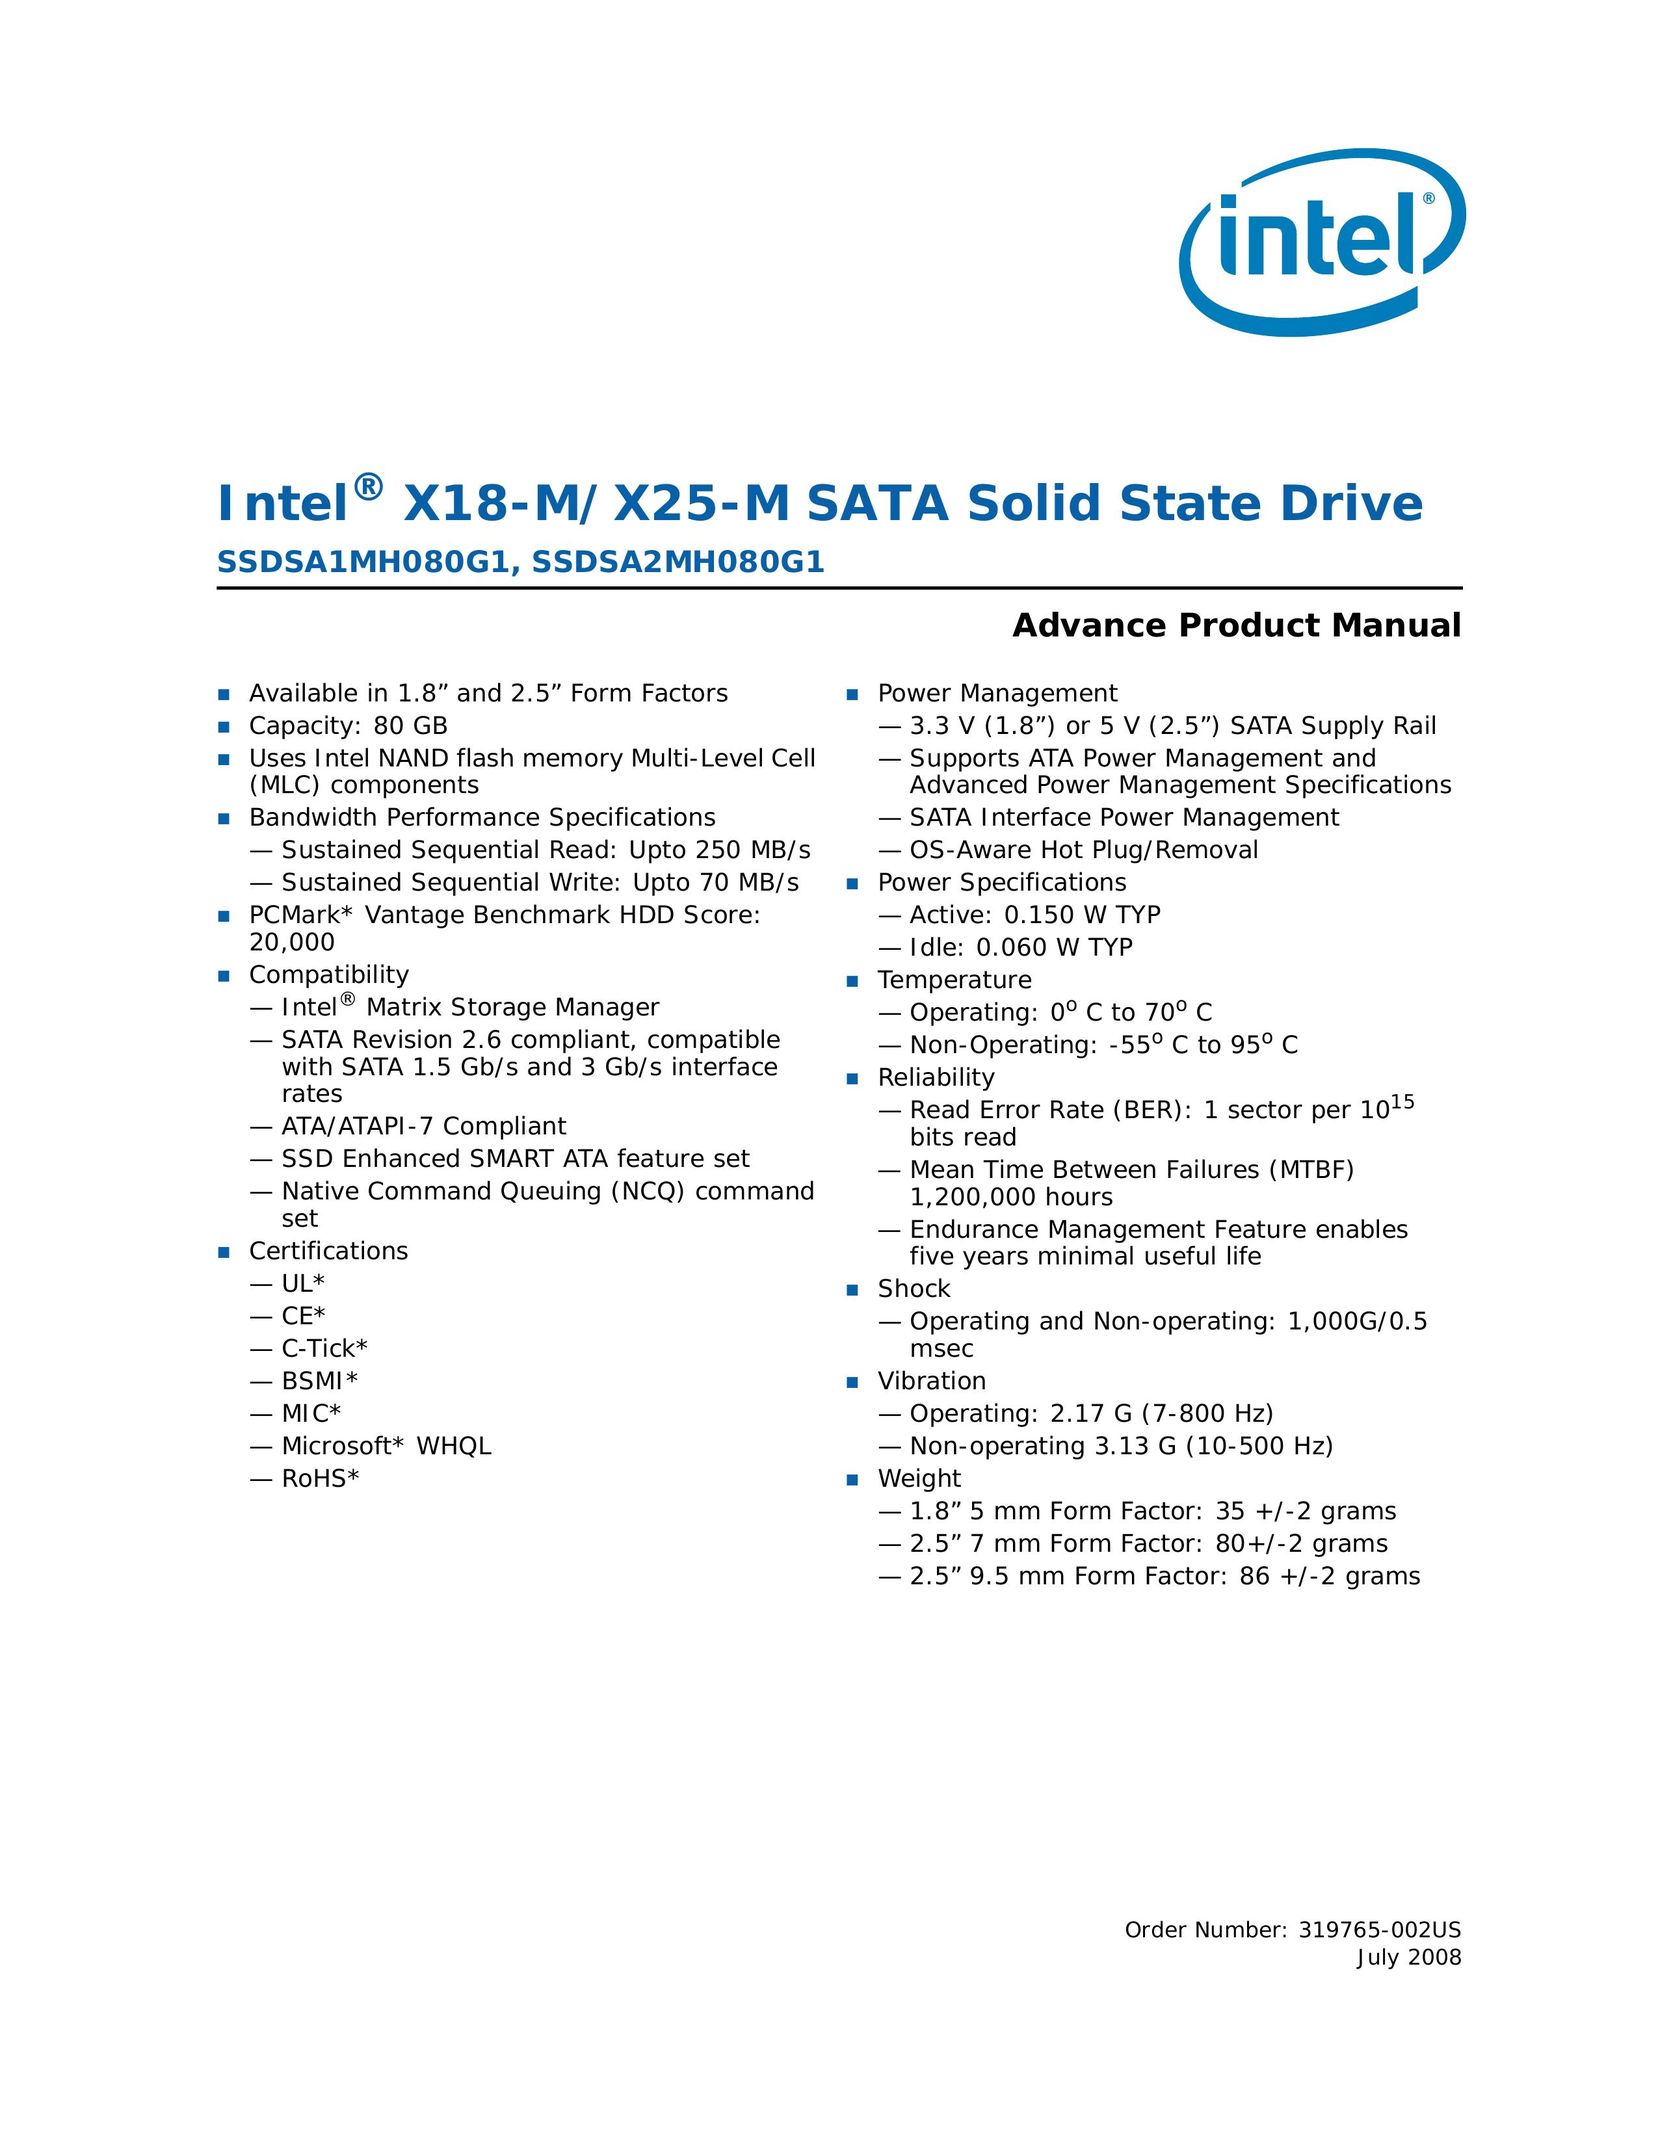 Intel X18-M Computer Drive User Manual